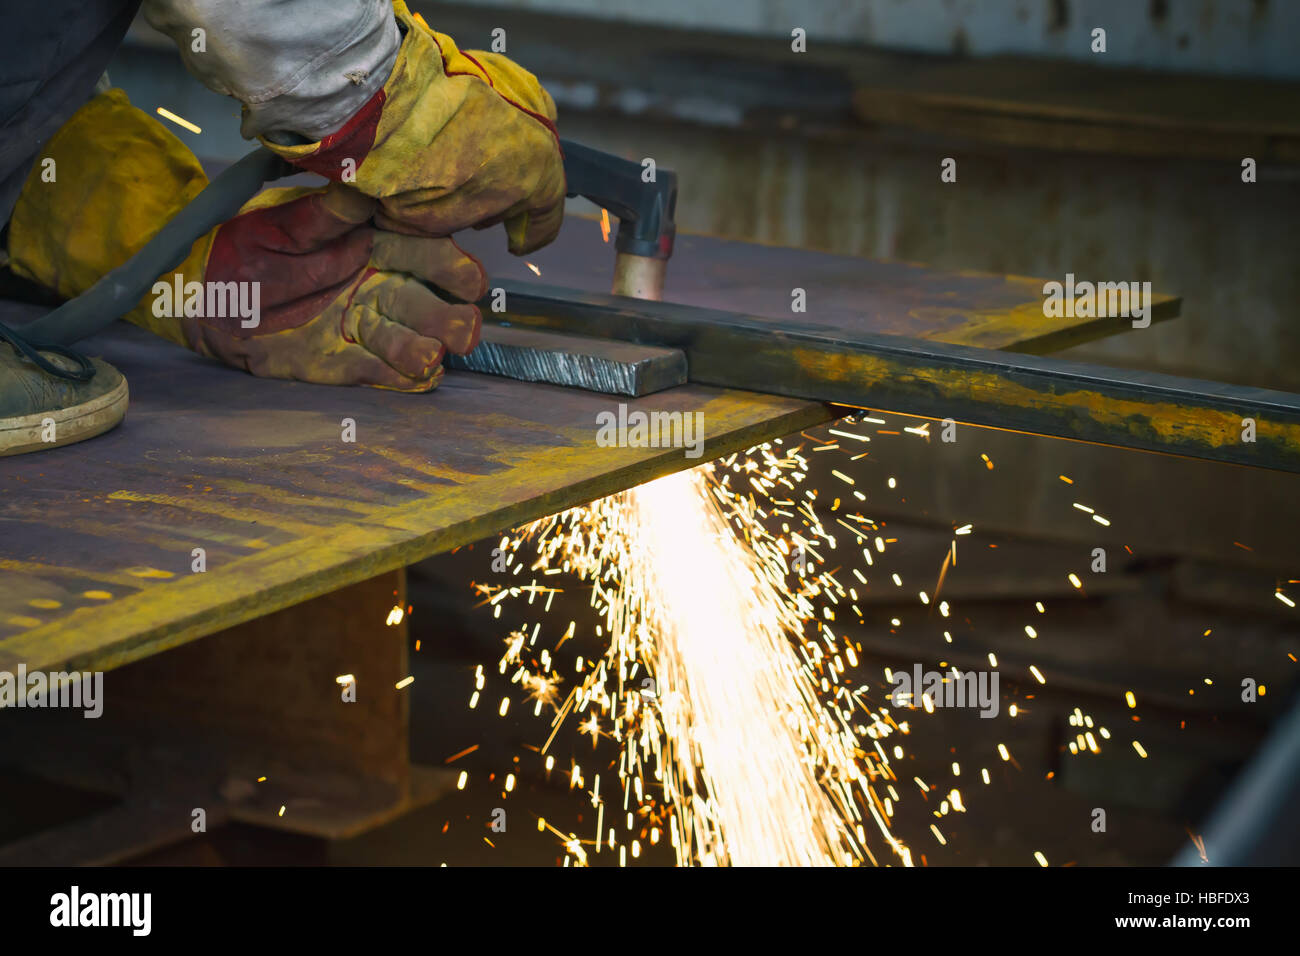 Plasma cutting steel plate Stock Photo